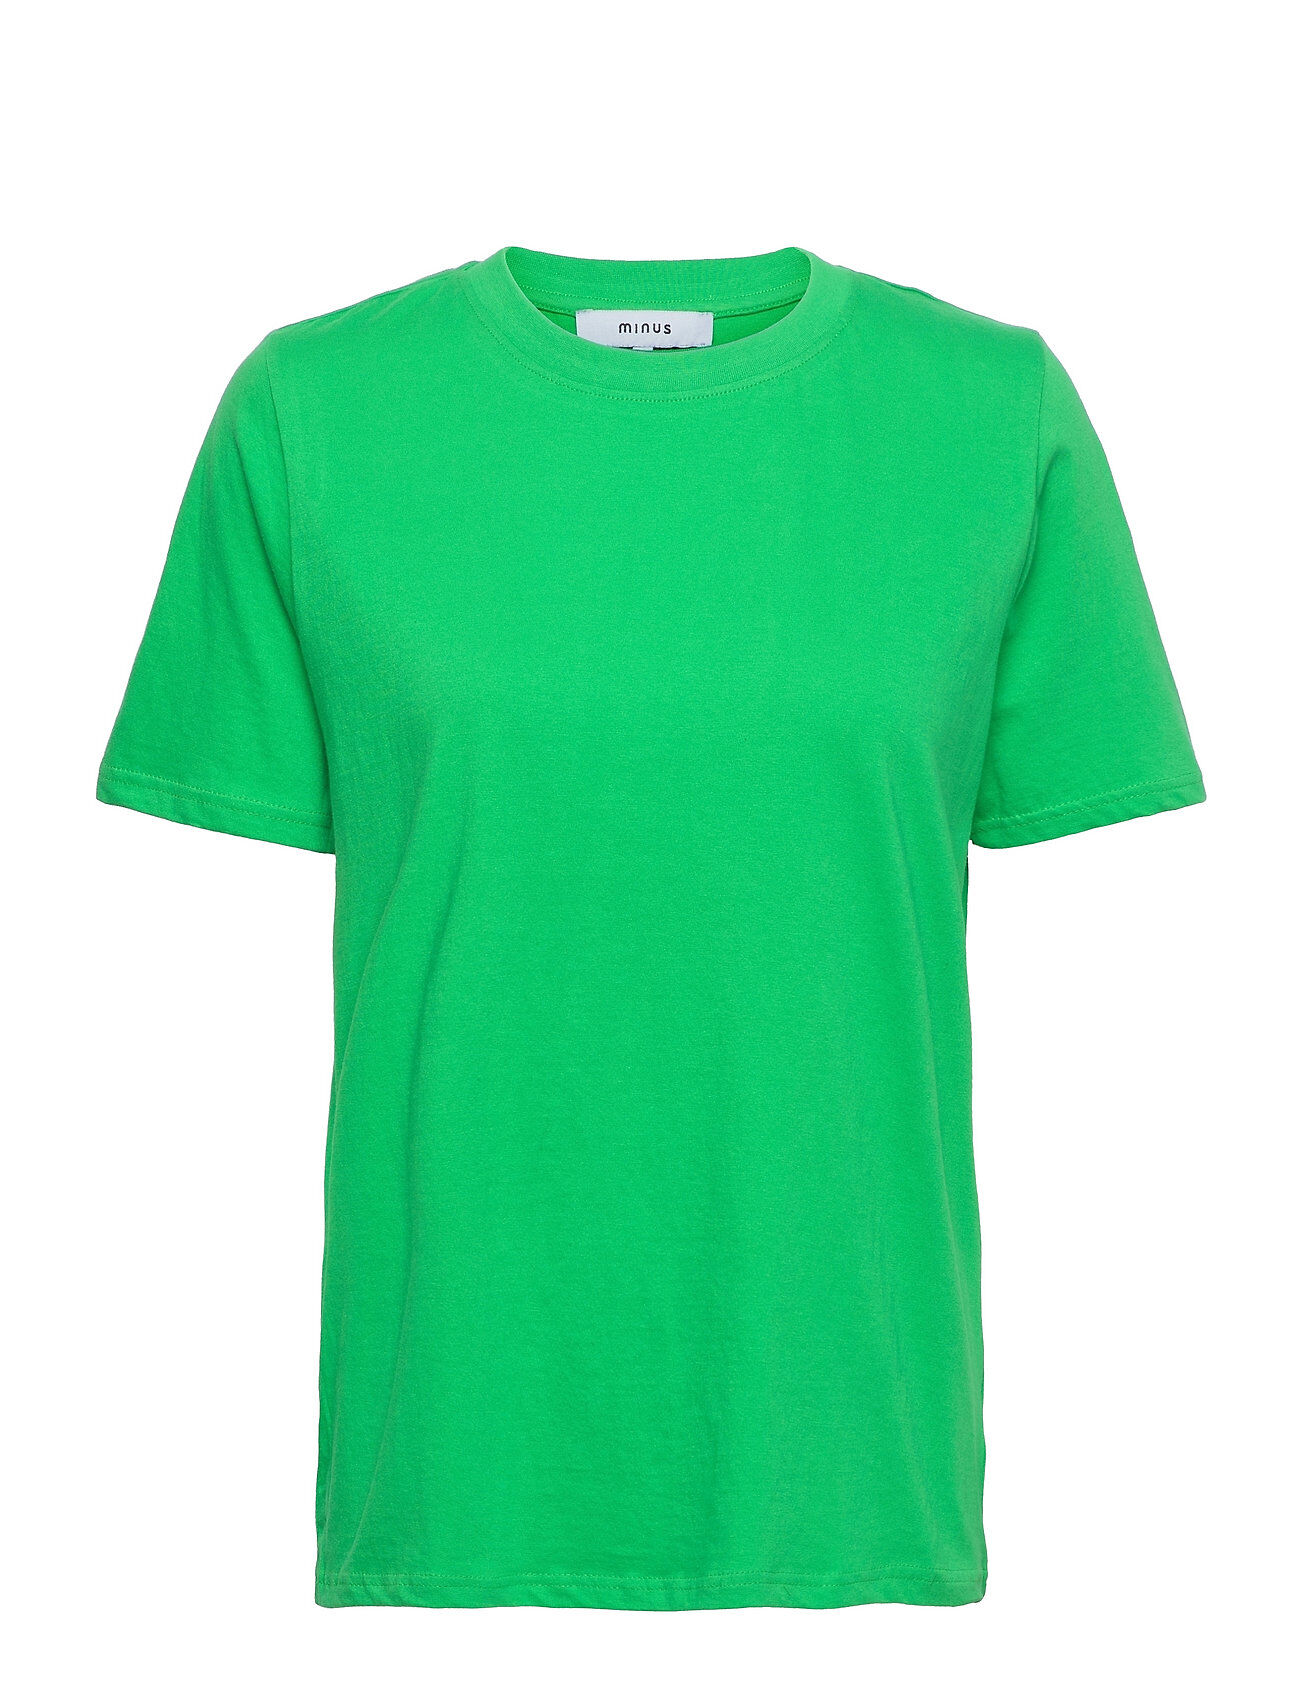 Minus Cathy Tee T-shirts & Tops Short-sleeved Grønn Minus